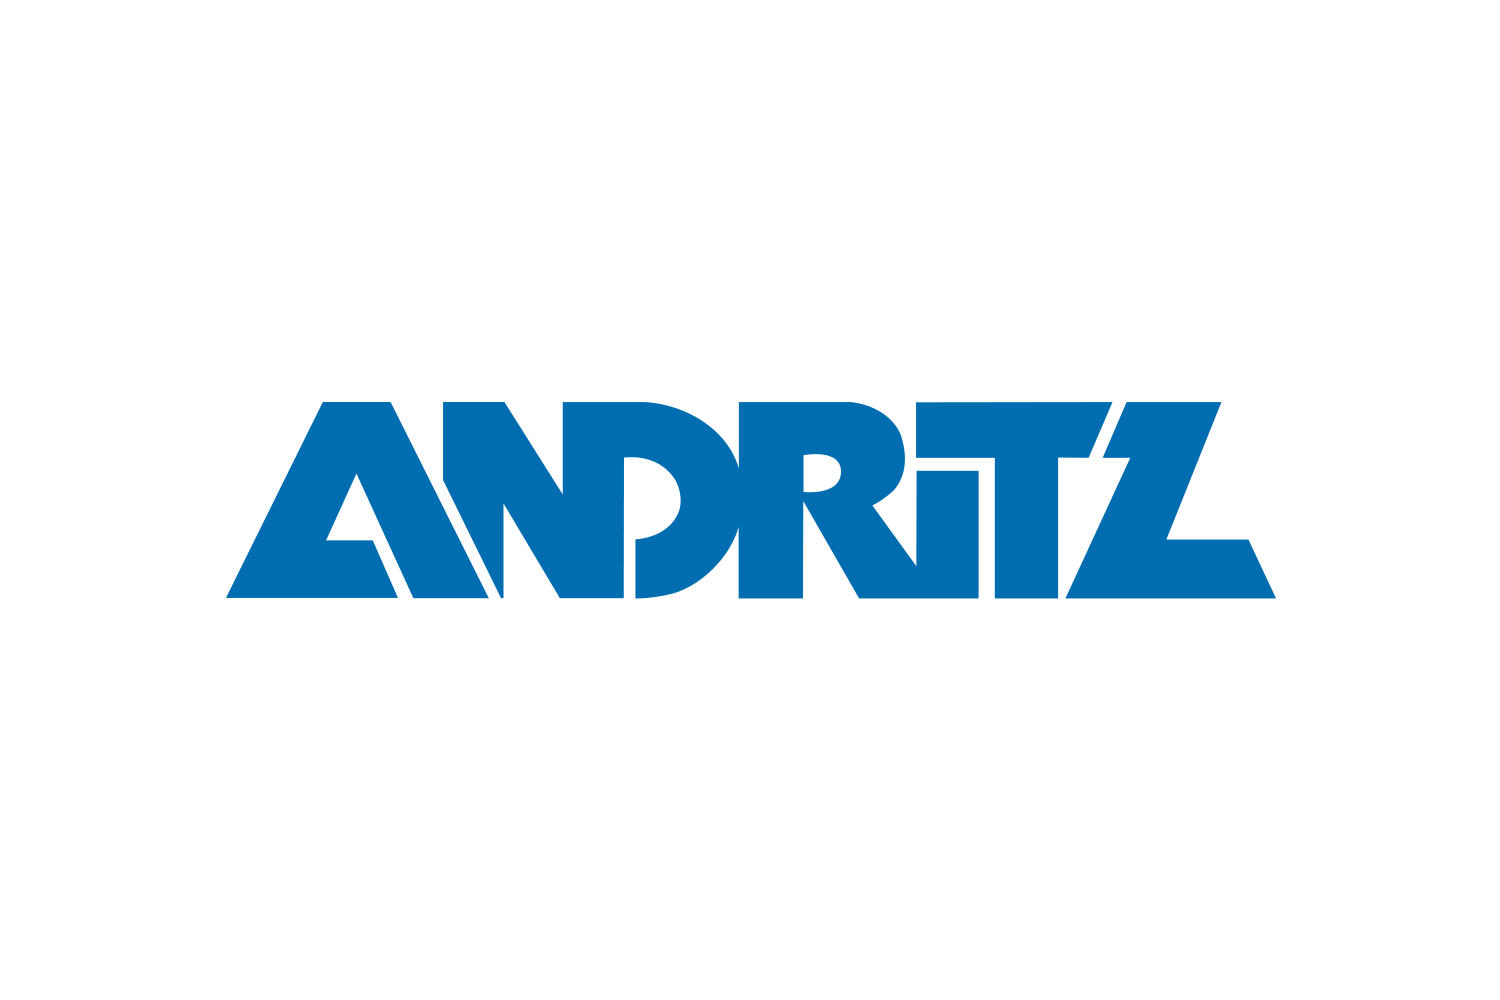 andritz logo